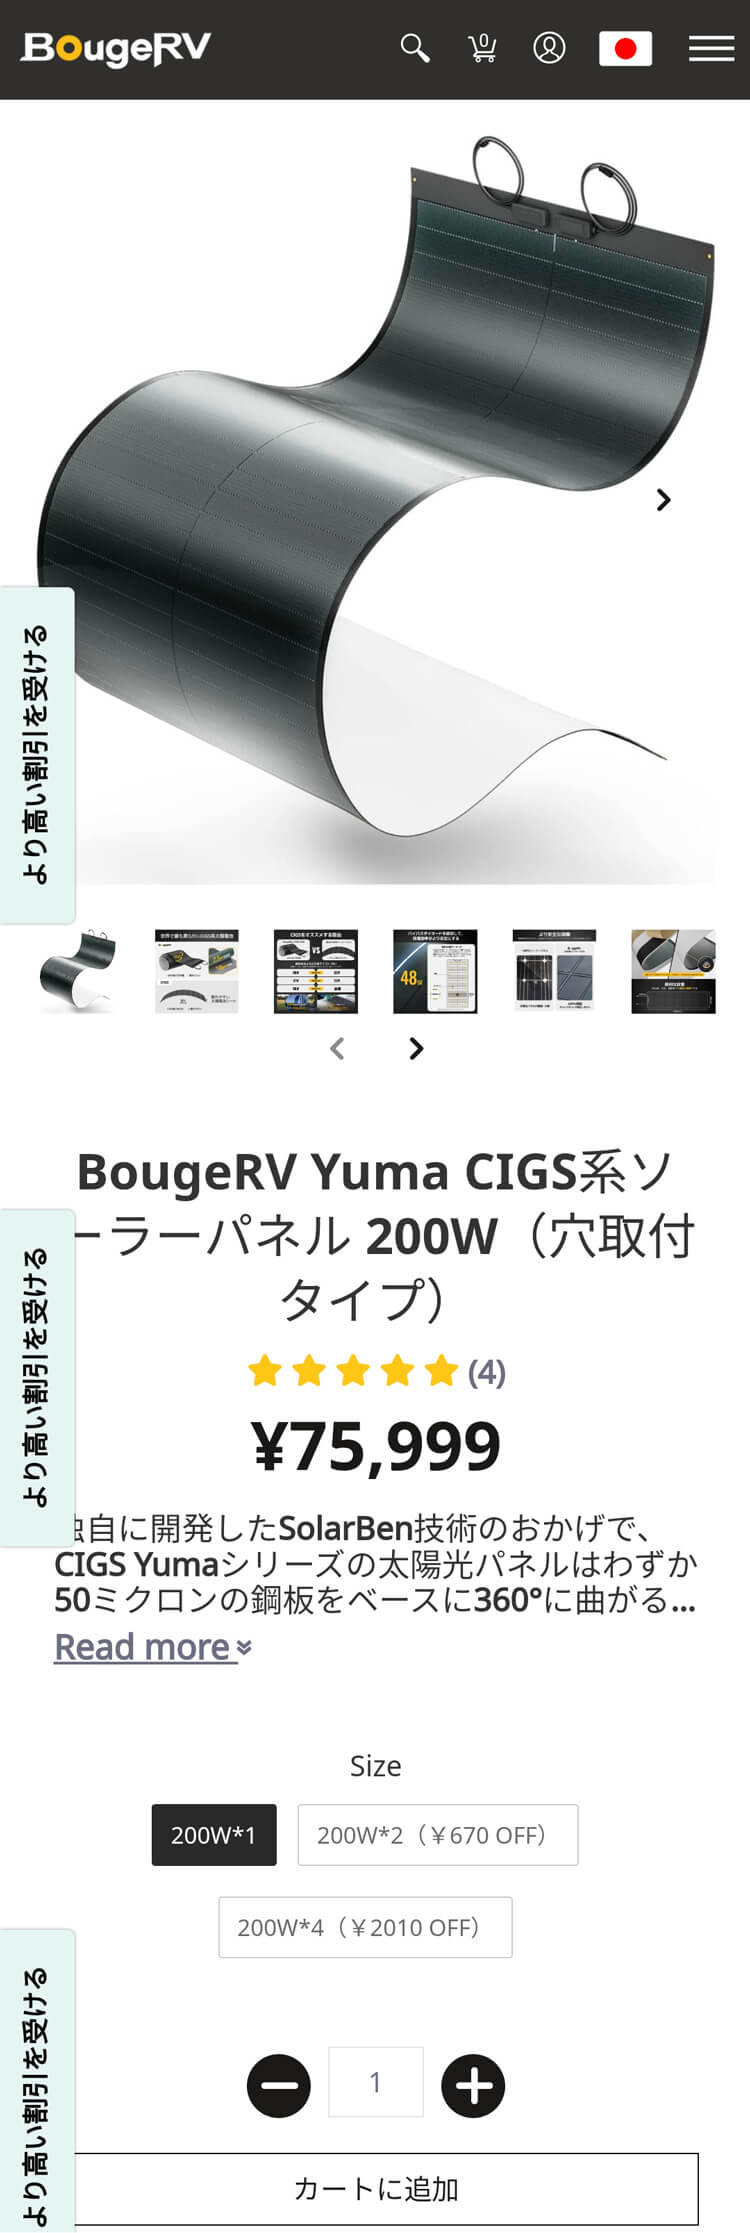 BougeRV Yuma CIGS系ソーラーパネル 200Wの公式HPの商品ページ画面